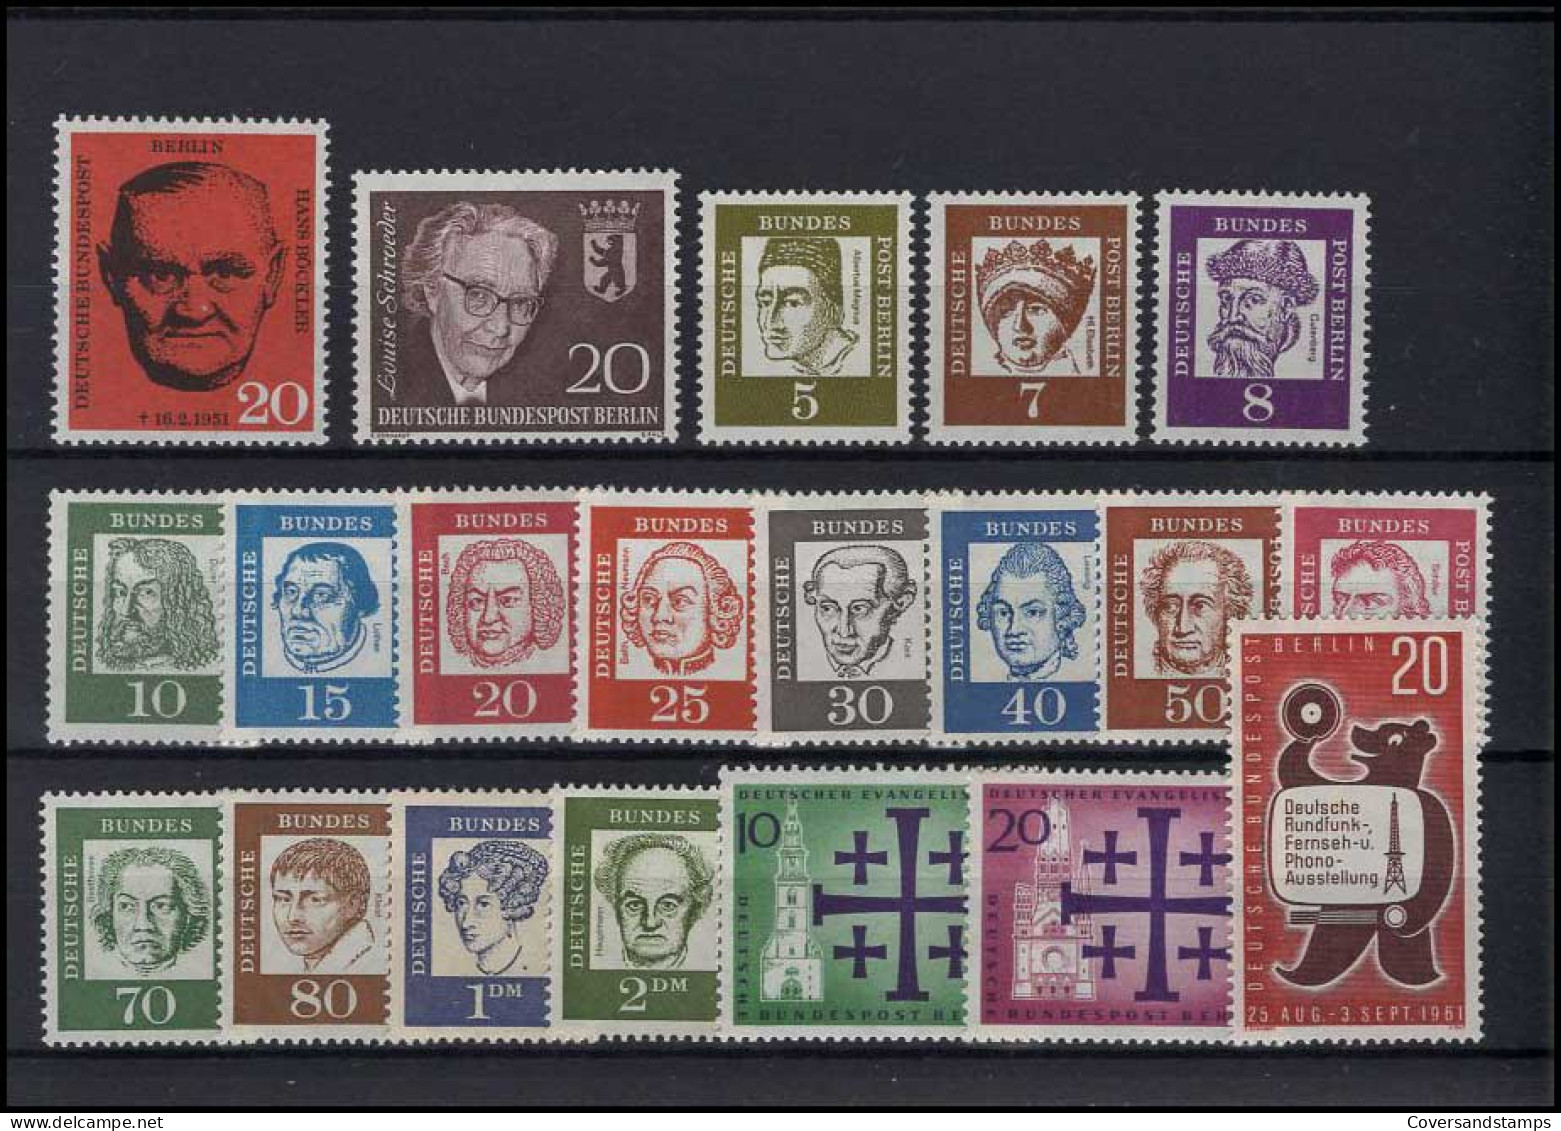   Bundespost Berlin - Volledig Jaar / Jahrgang 1961  MNH - Ongebruikt